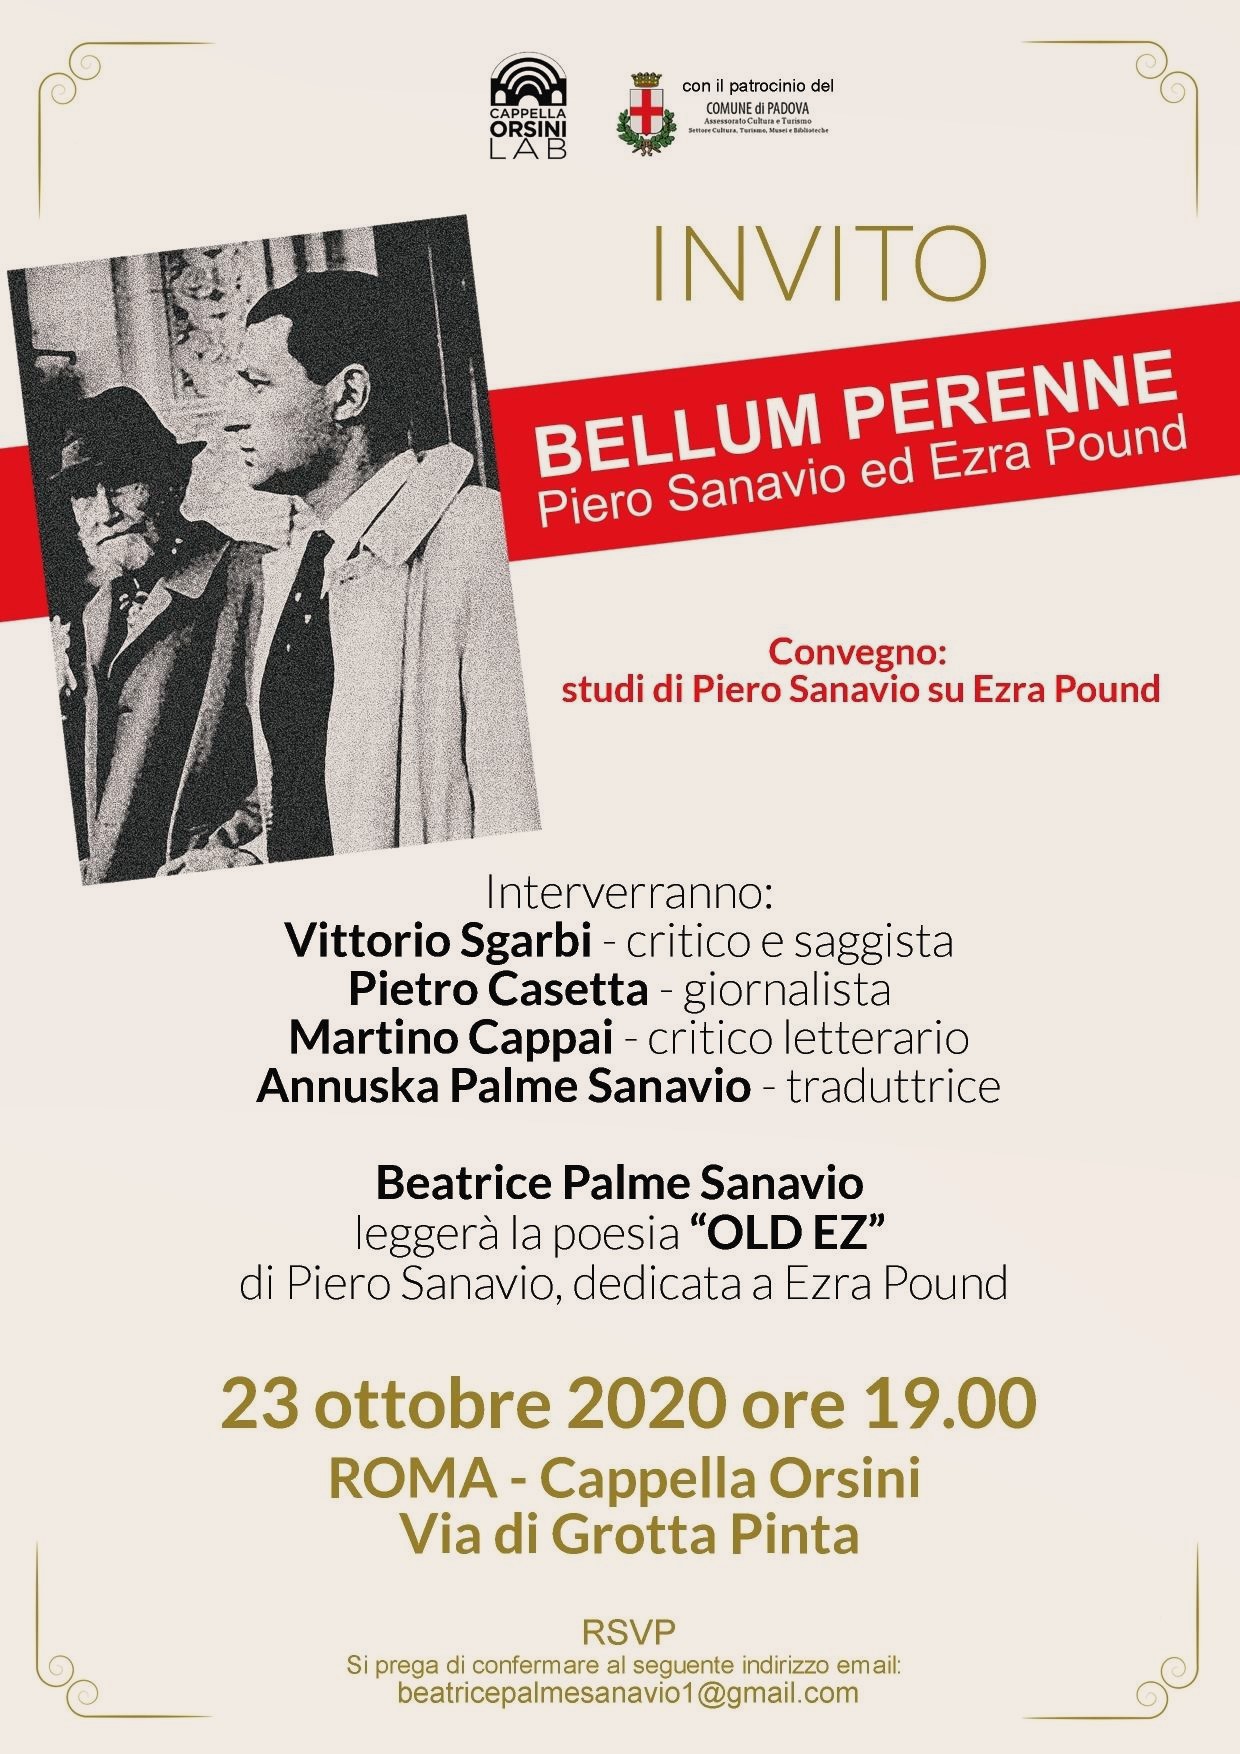 Ezra Pound, Piero Sanavio, Vittorio Sgarbi, Pietro Casetta, Martino Cappai, Anuska Palme Sanavio